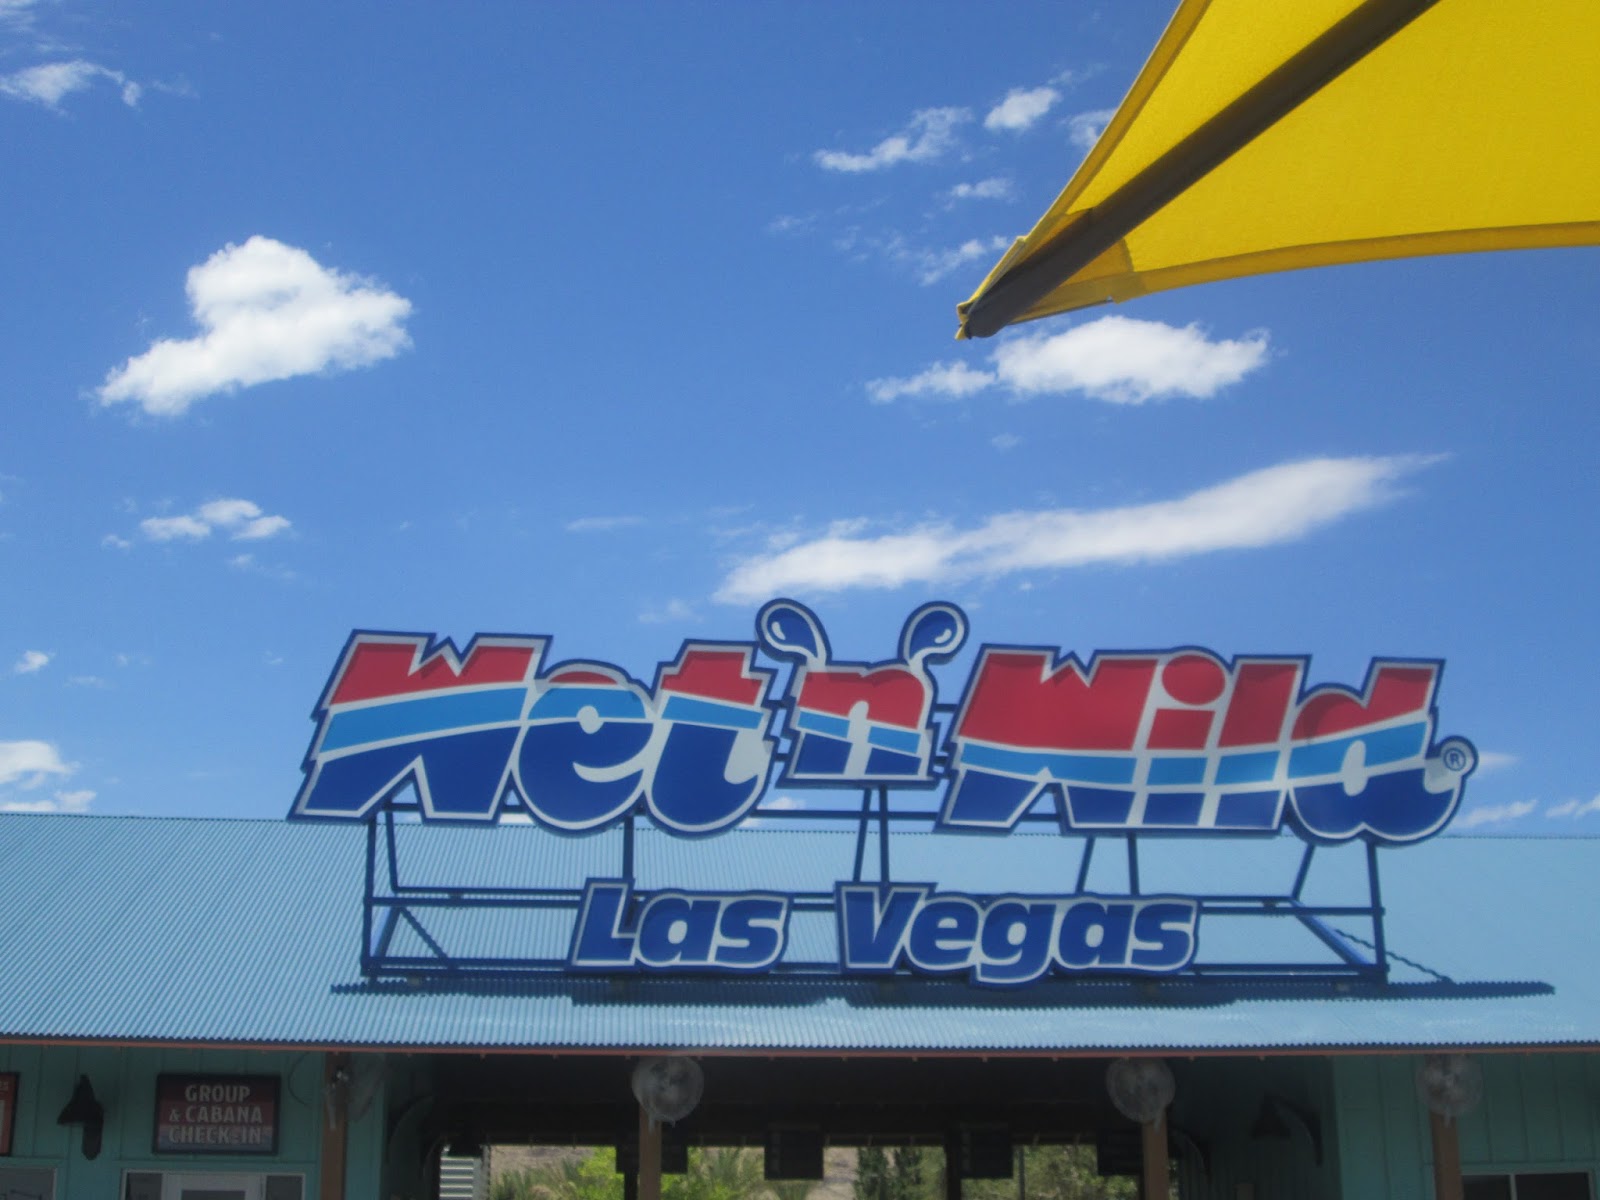 Wet 'n' Wild - Las Vegas - Tickets & Reviews